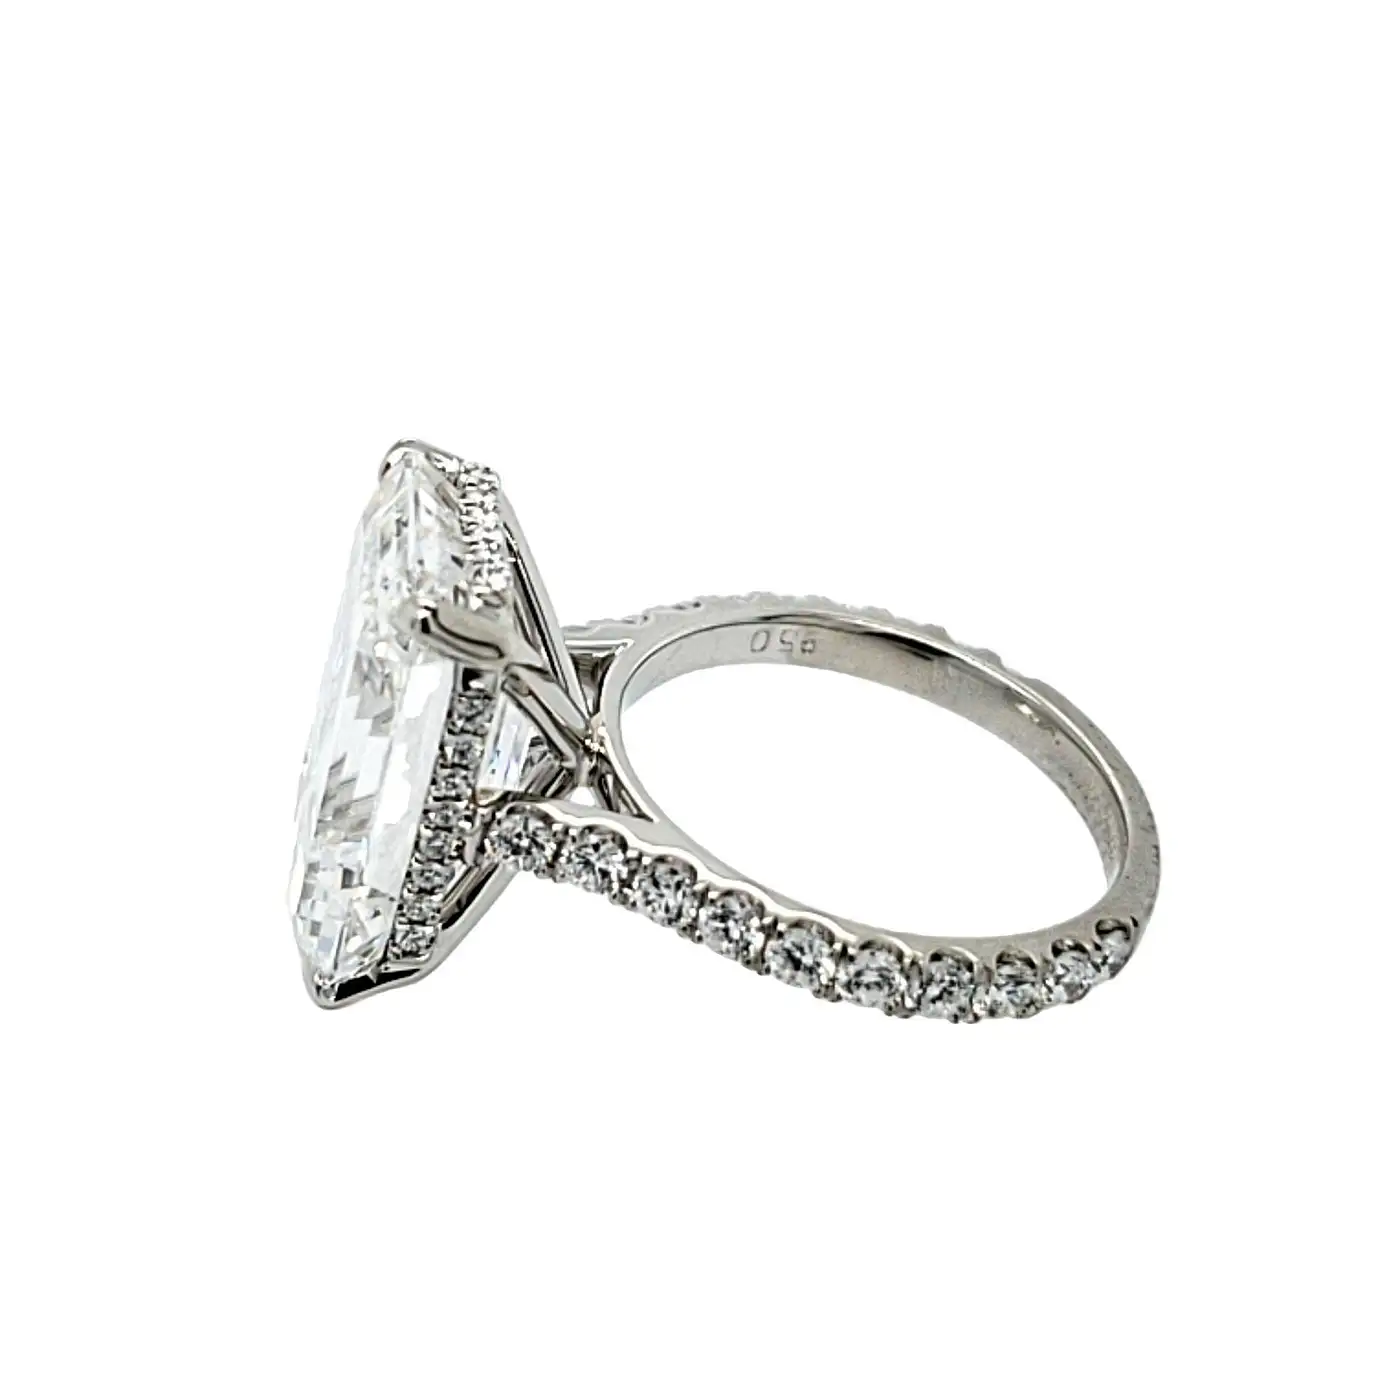 David-Rosenberg-10.41-Carat-Emerald-Cut-F-VVS2-GIA-Diamond-Engagement-Ring-6.webp